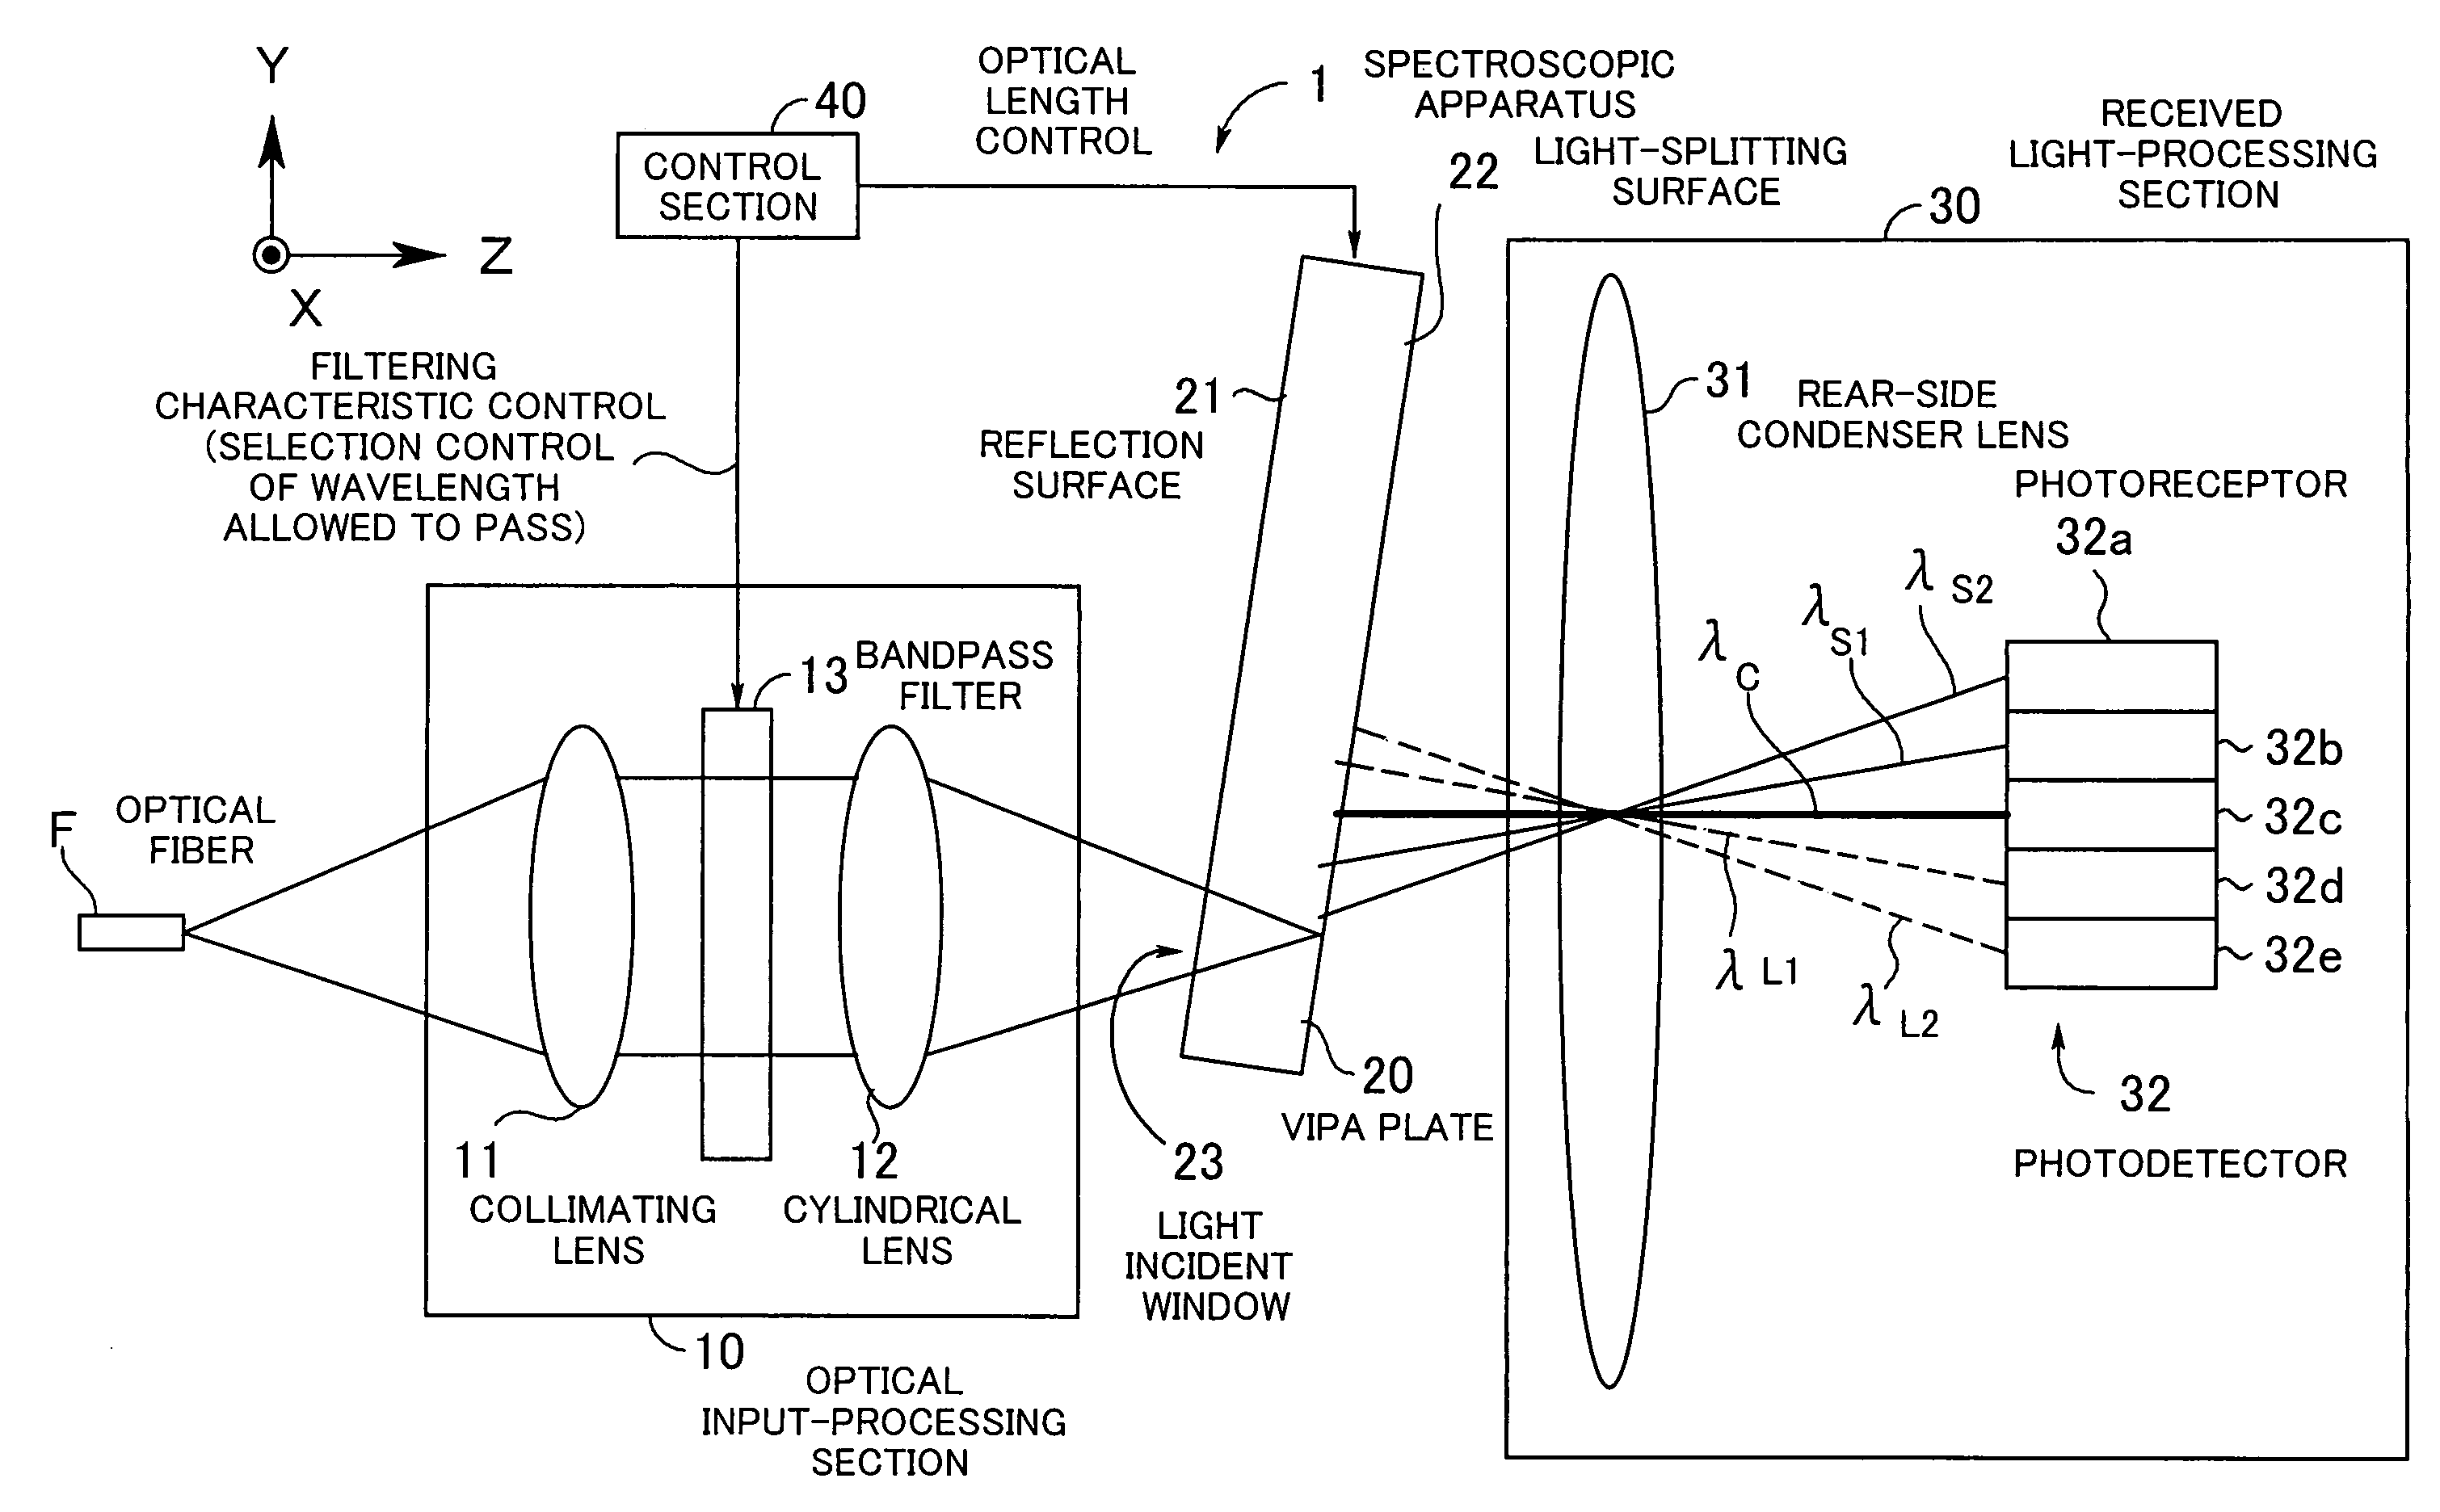 Spectroscopic apparatus